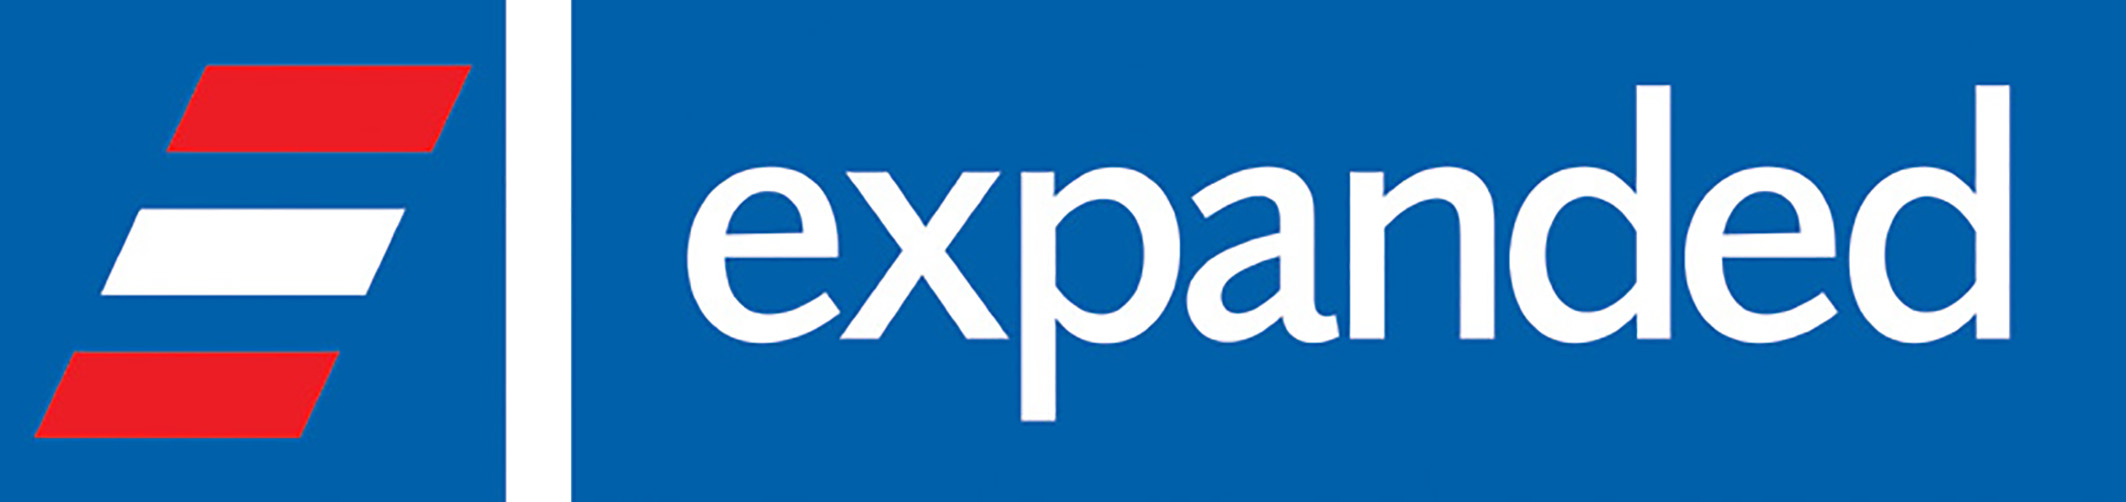 expanded-logo